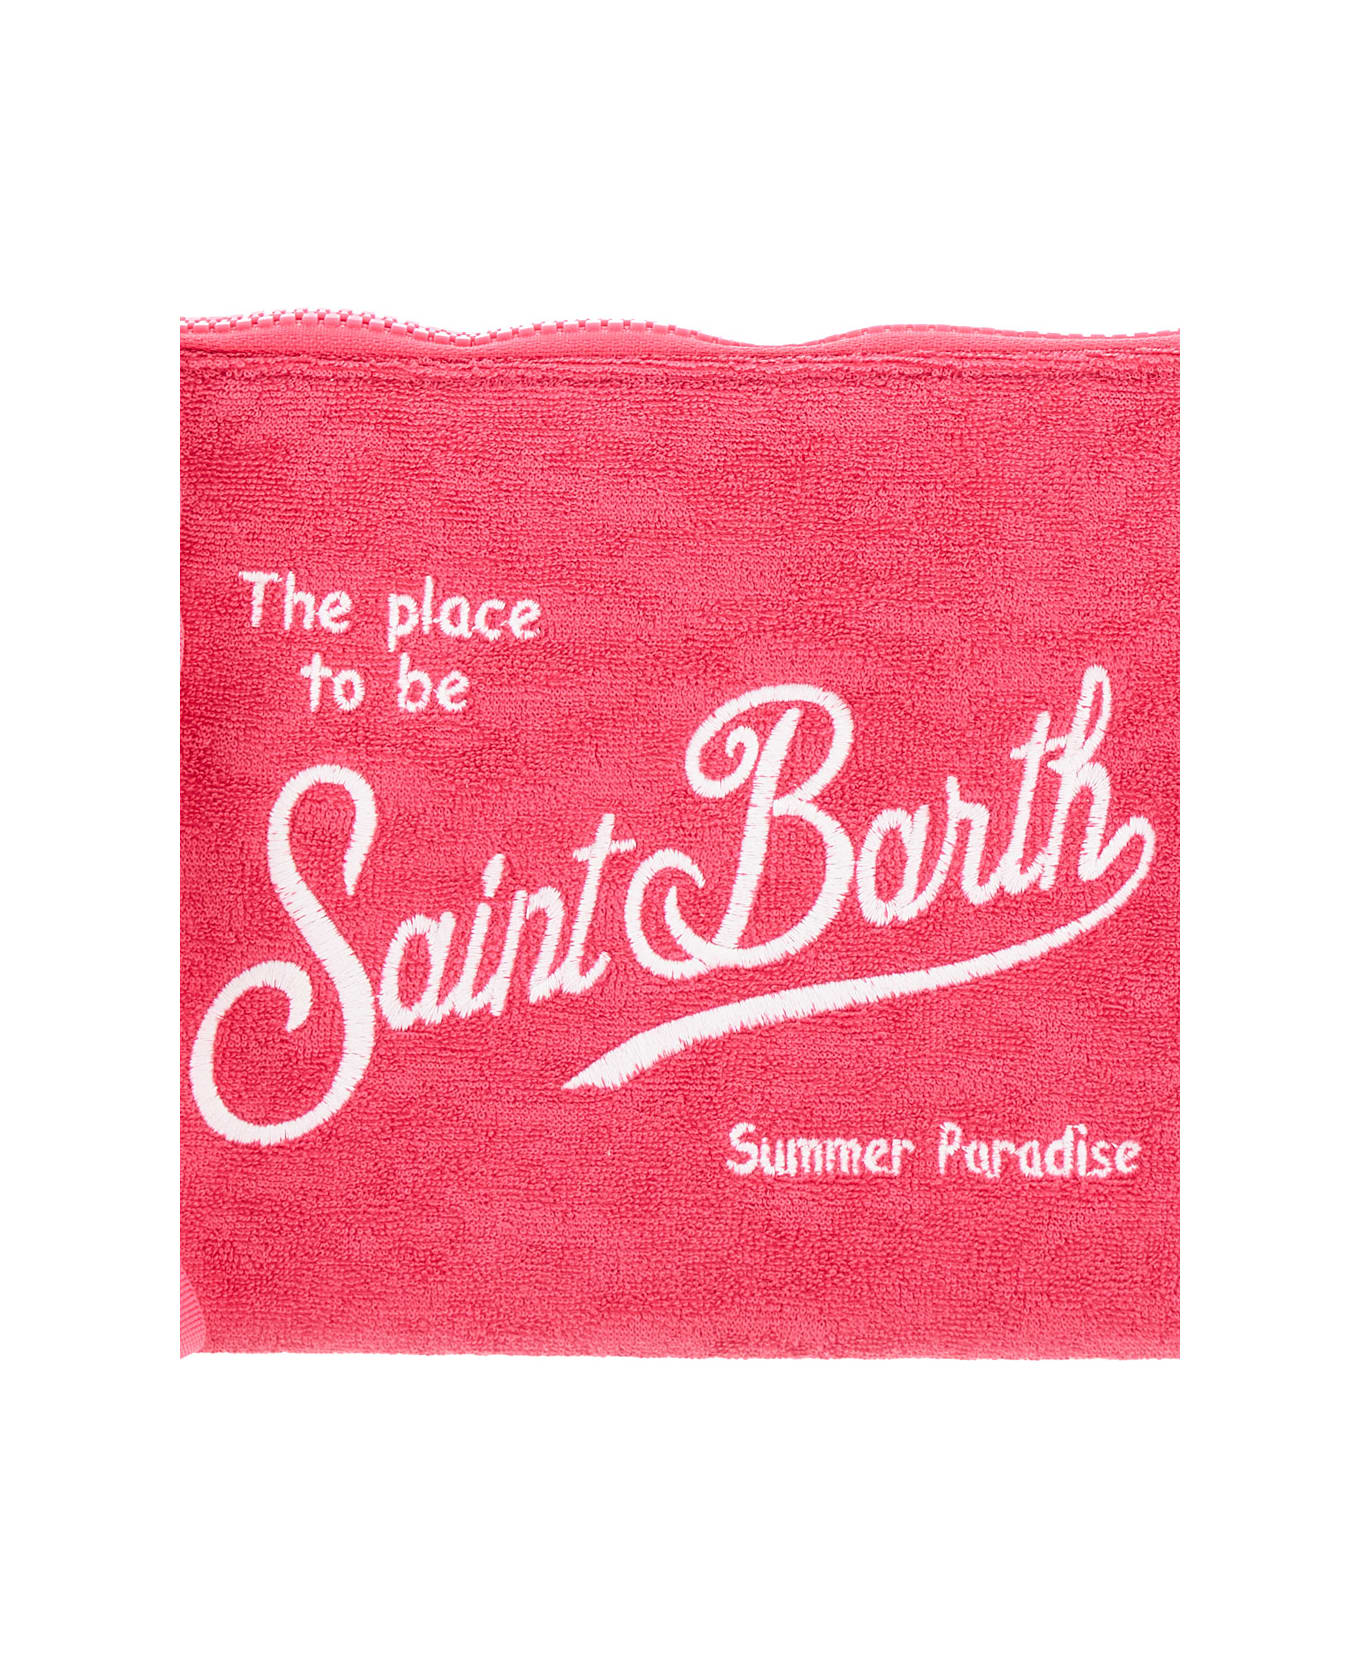 MC2 Saint Barth 'aline' Pink Pochette With Jacquard Logo In Sponge Girl - Fuxia